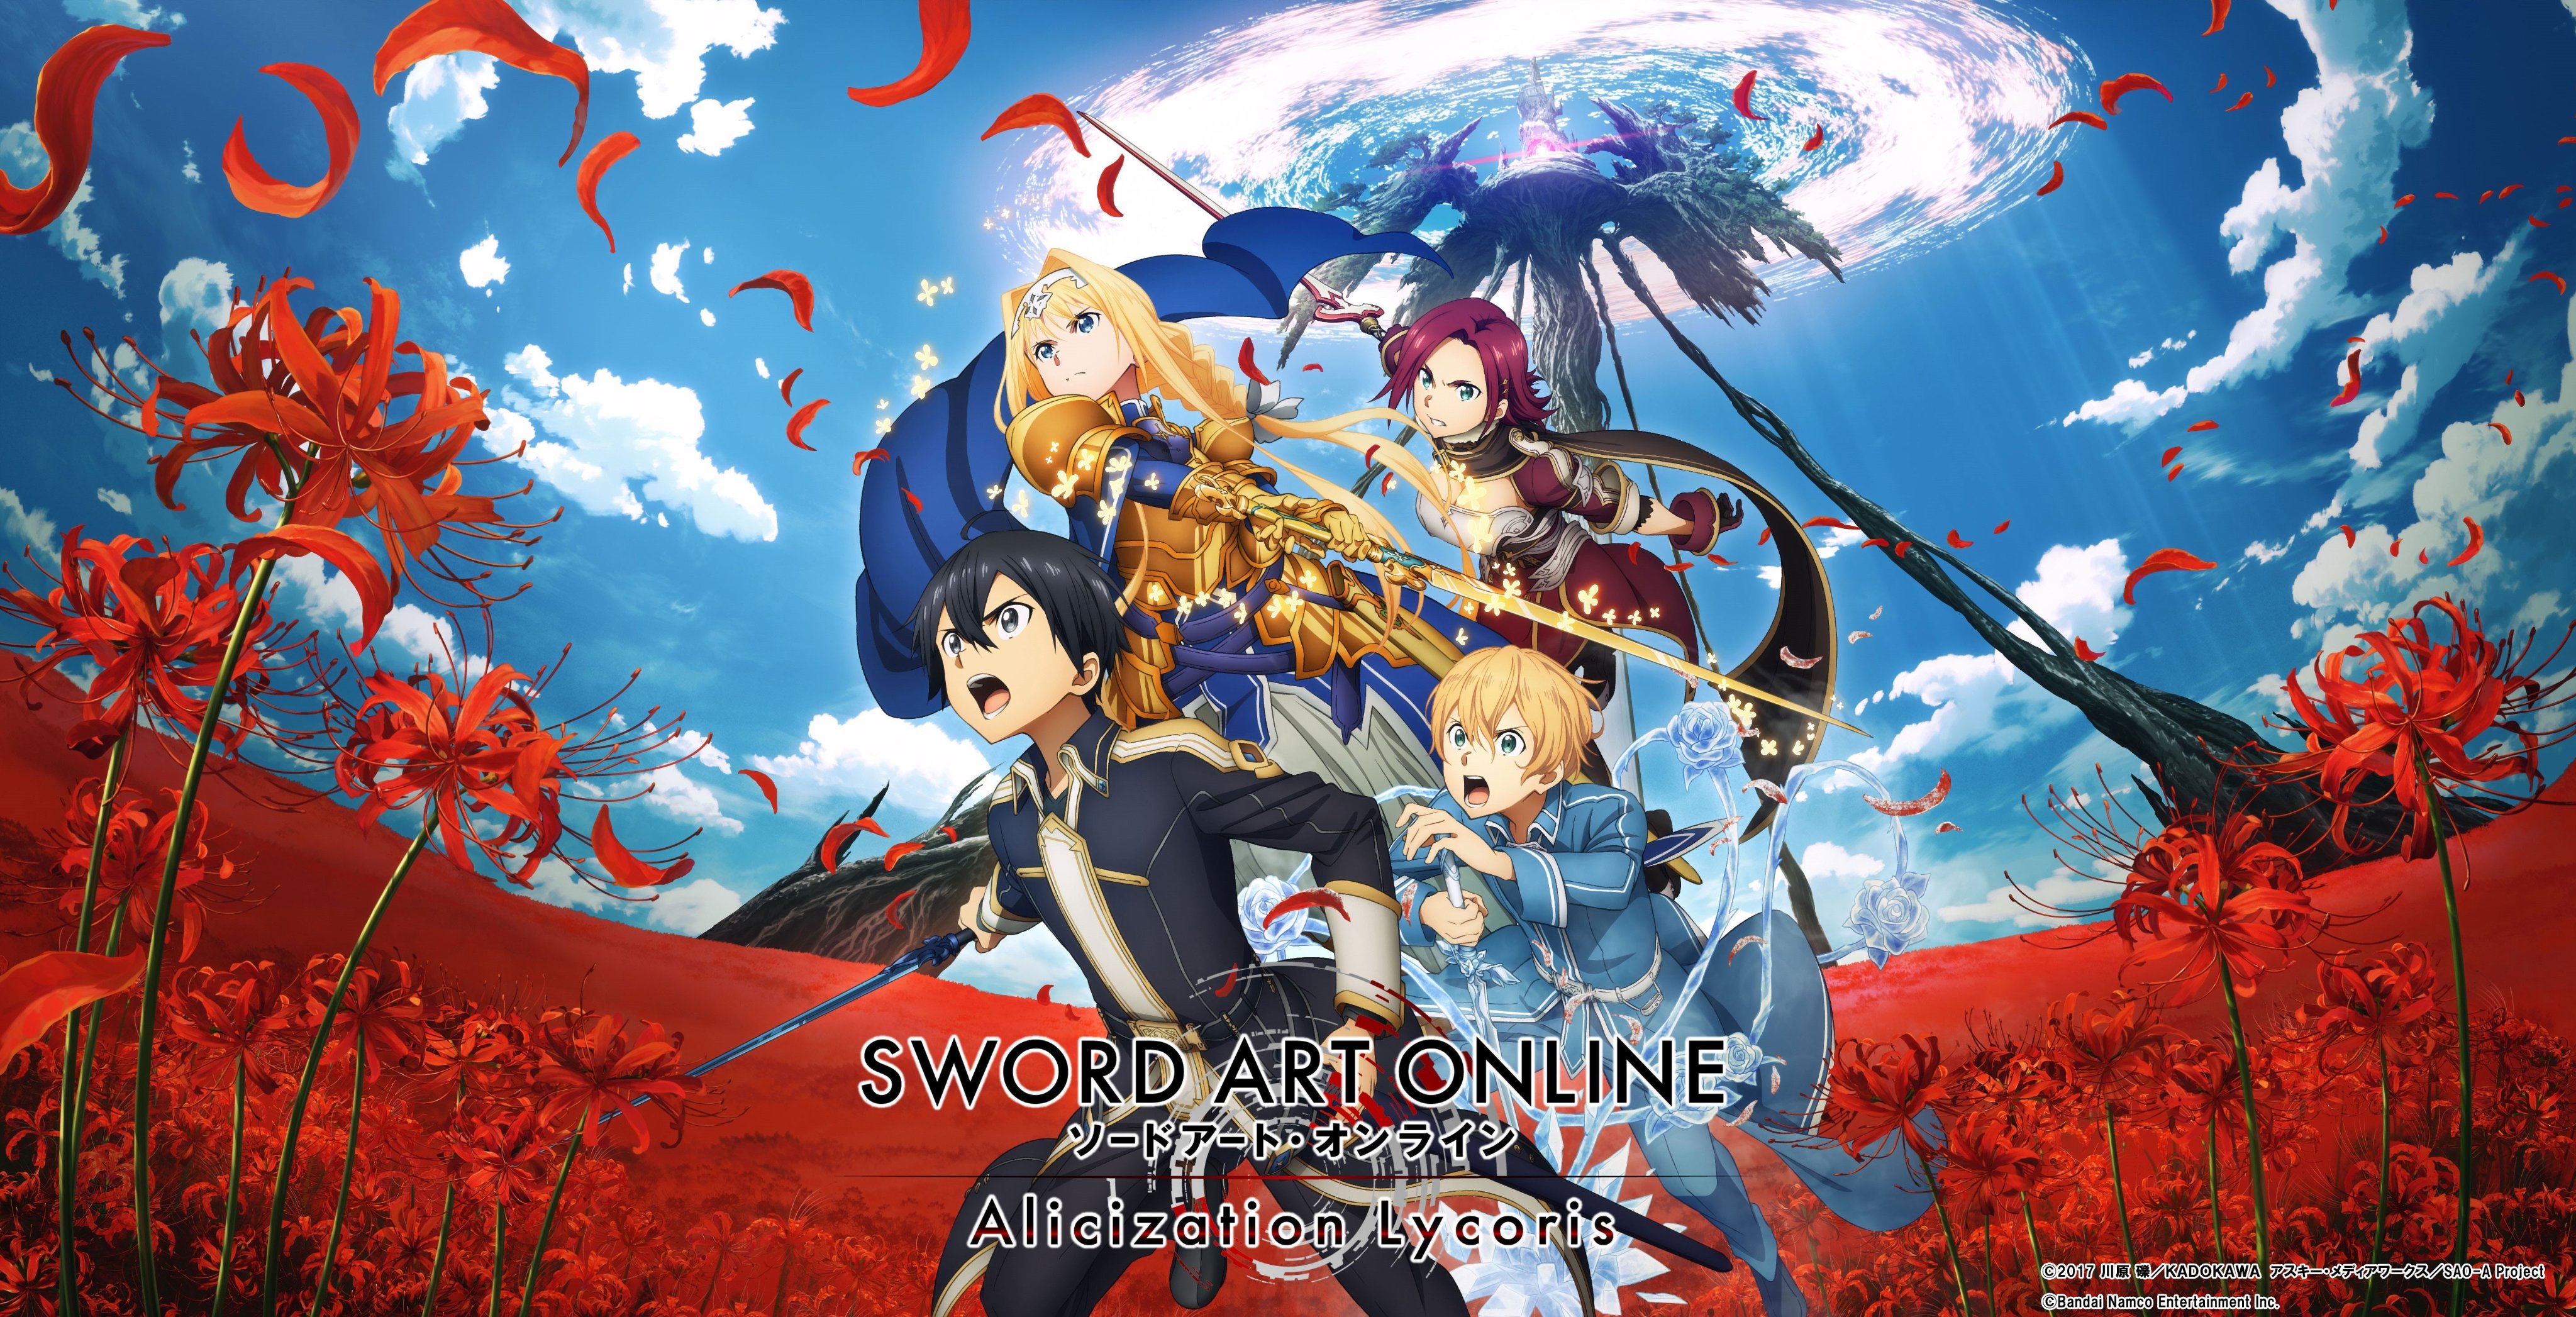 Sword Art Online: Alicization Lycoris Announced - mxdwn Games